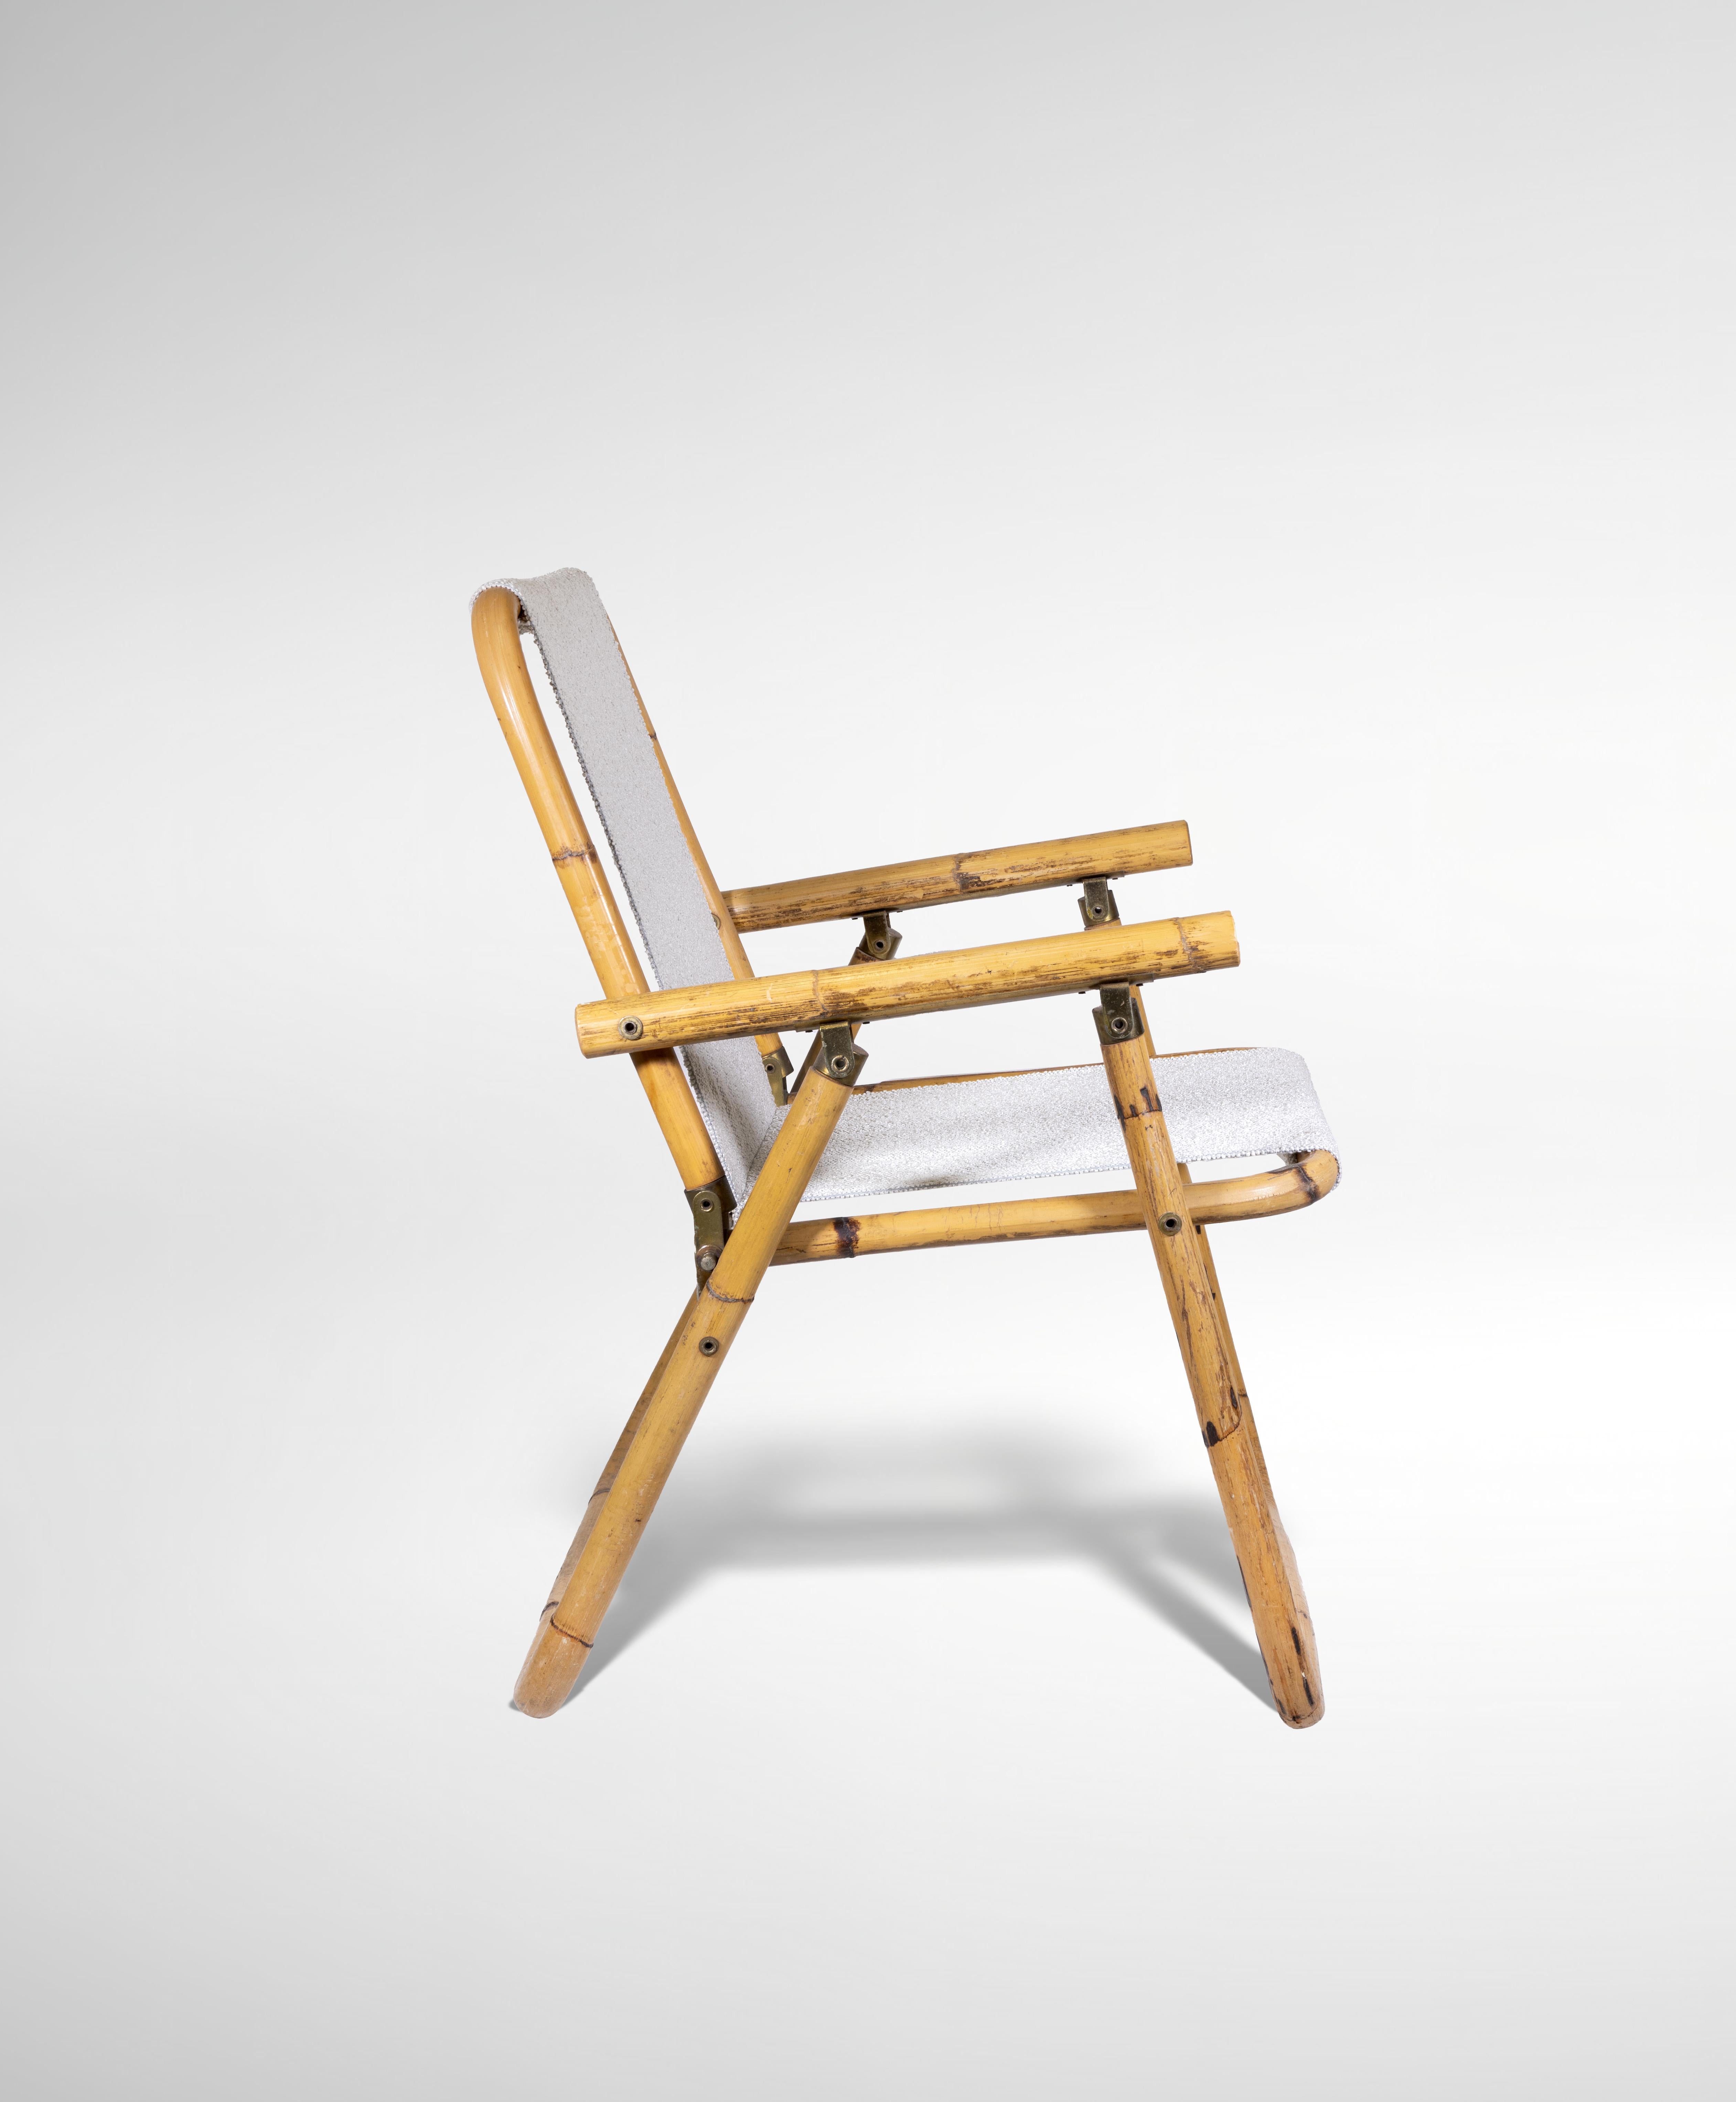 Folding Bambu chair, Italy 1960s.

83 x 63 x 63 cm.

Good conditions 